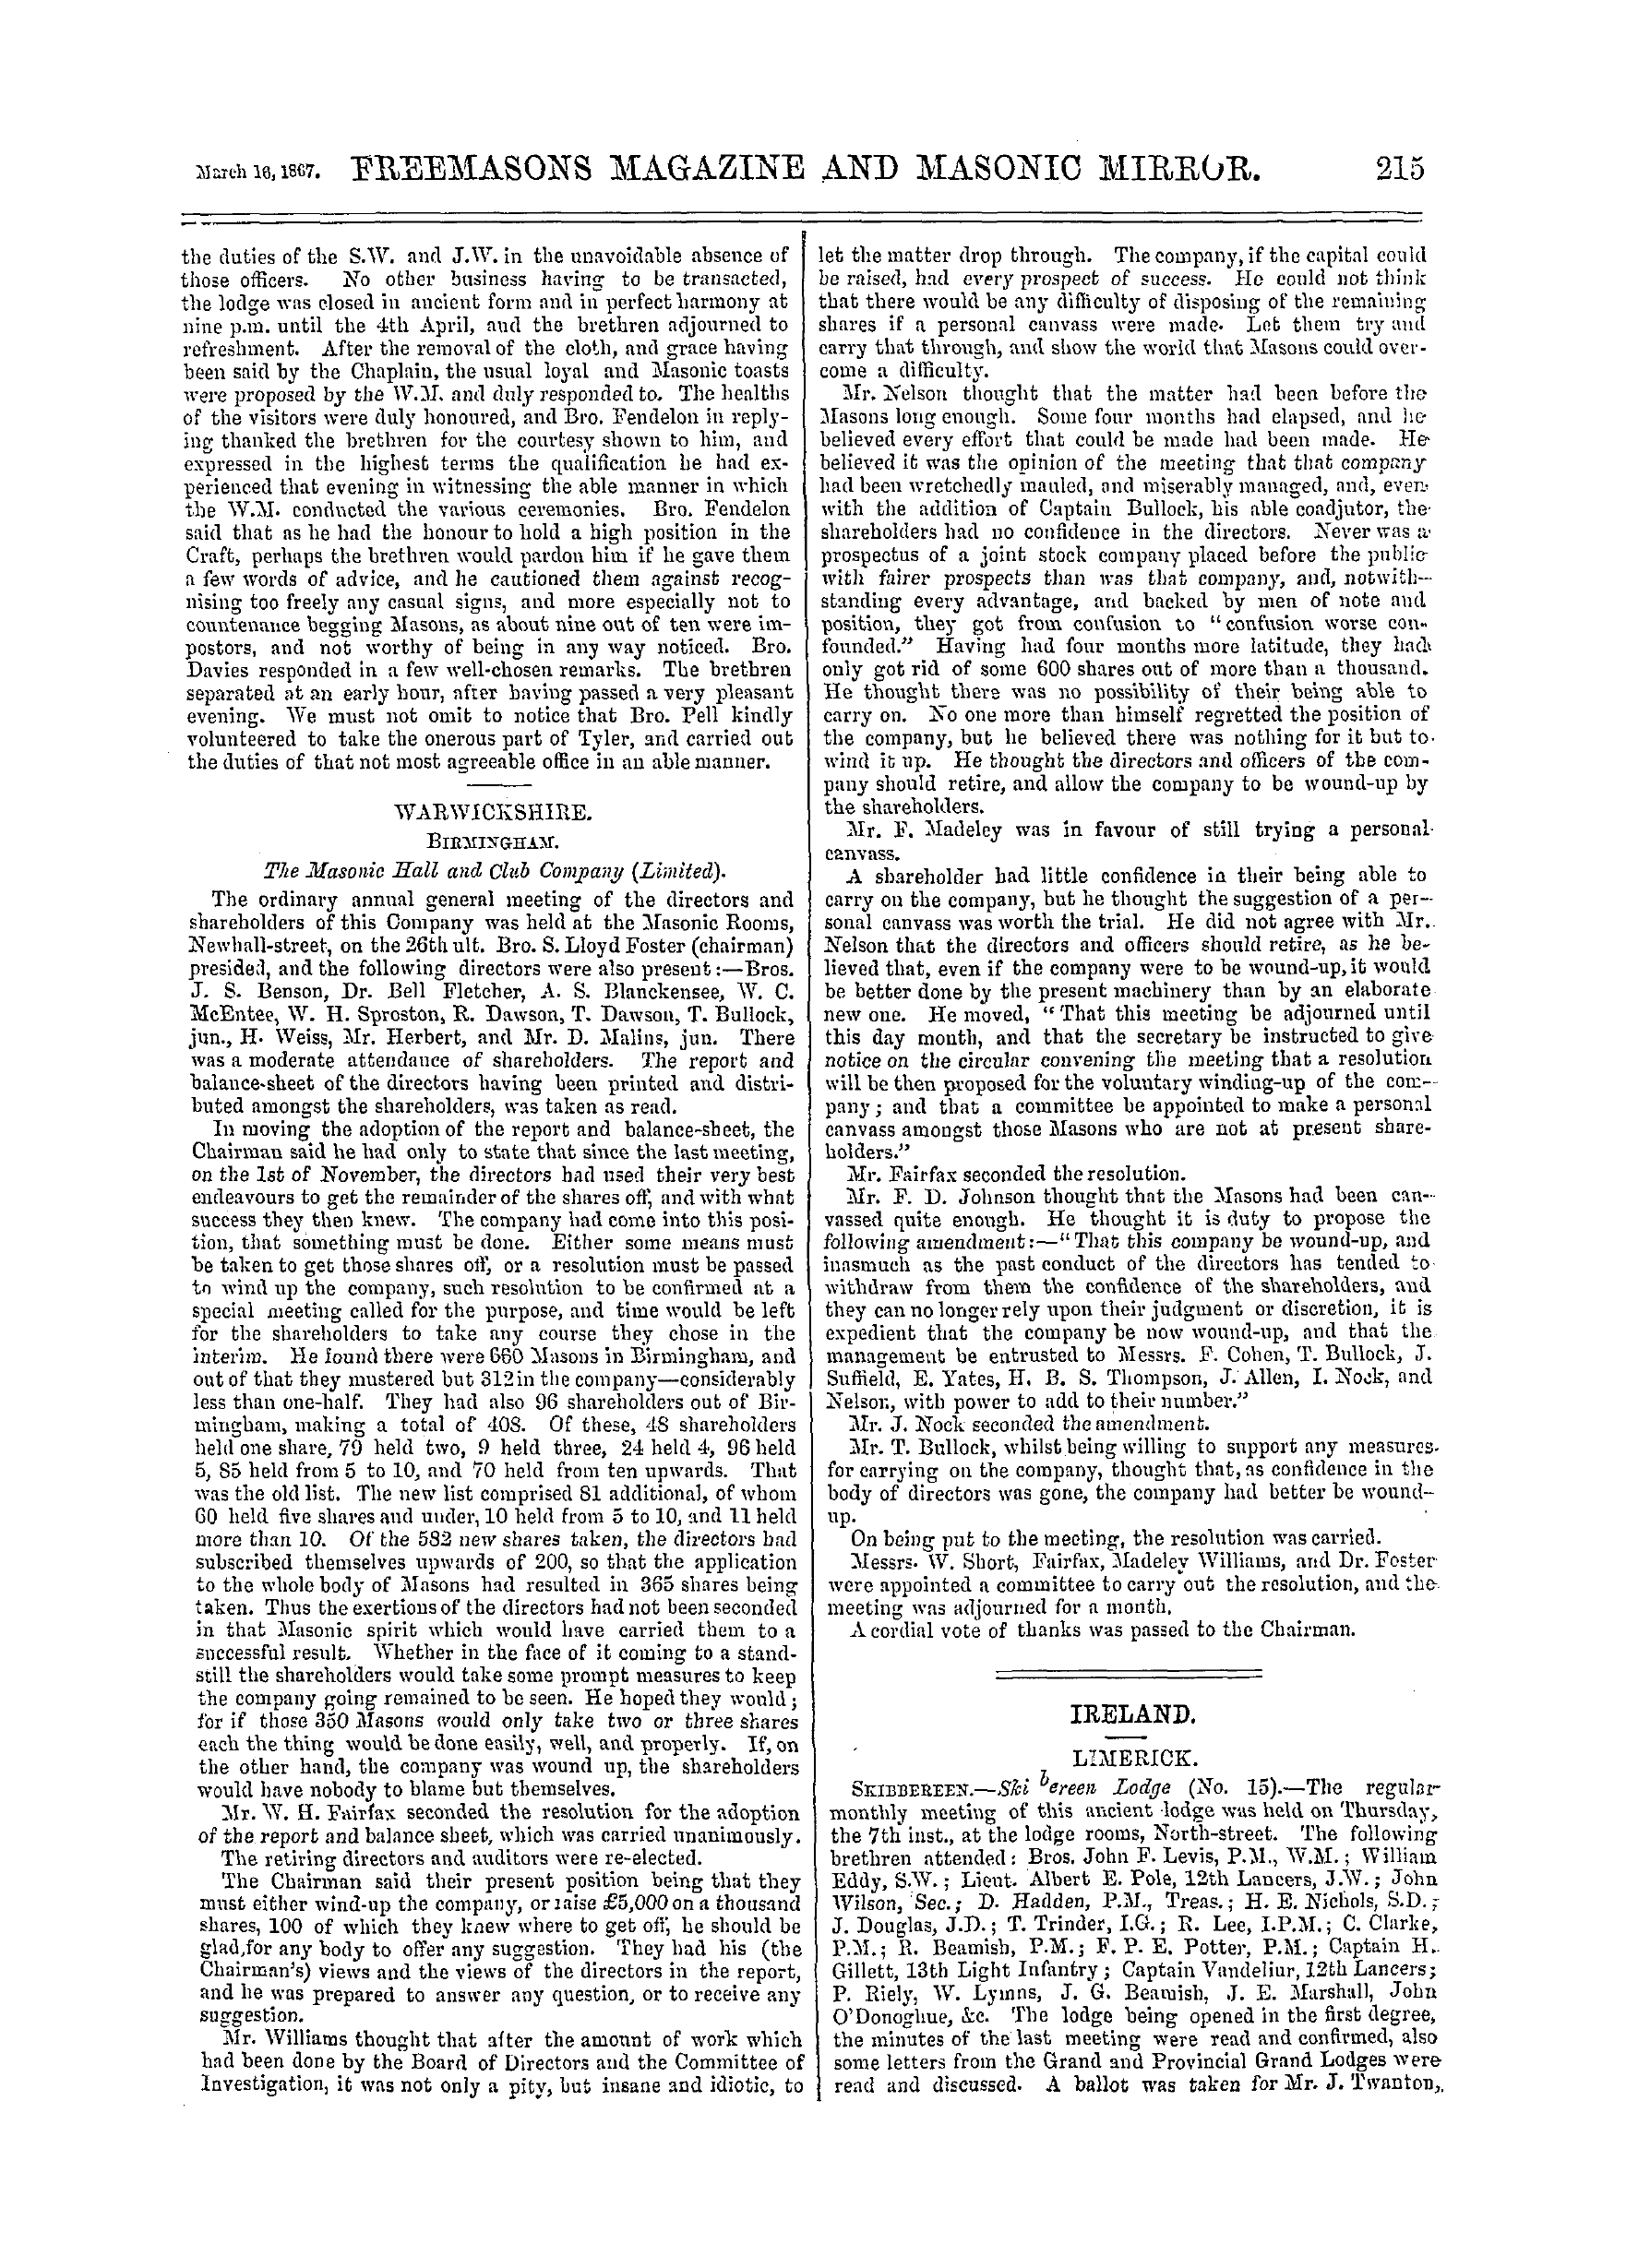 The Freemasons' Monthly Magazine: 1867-03-16 - Provincial.